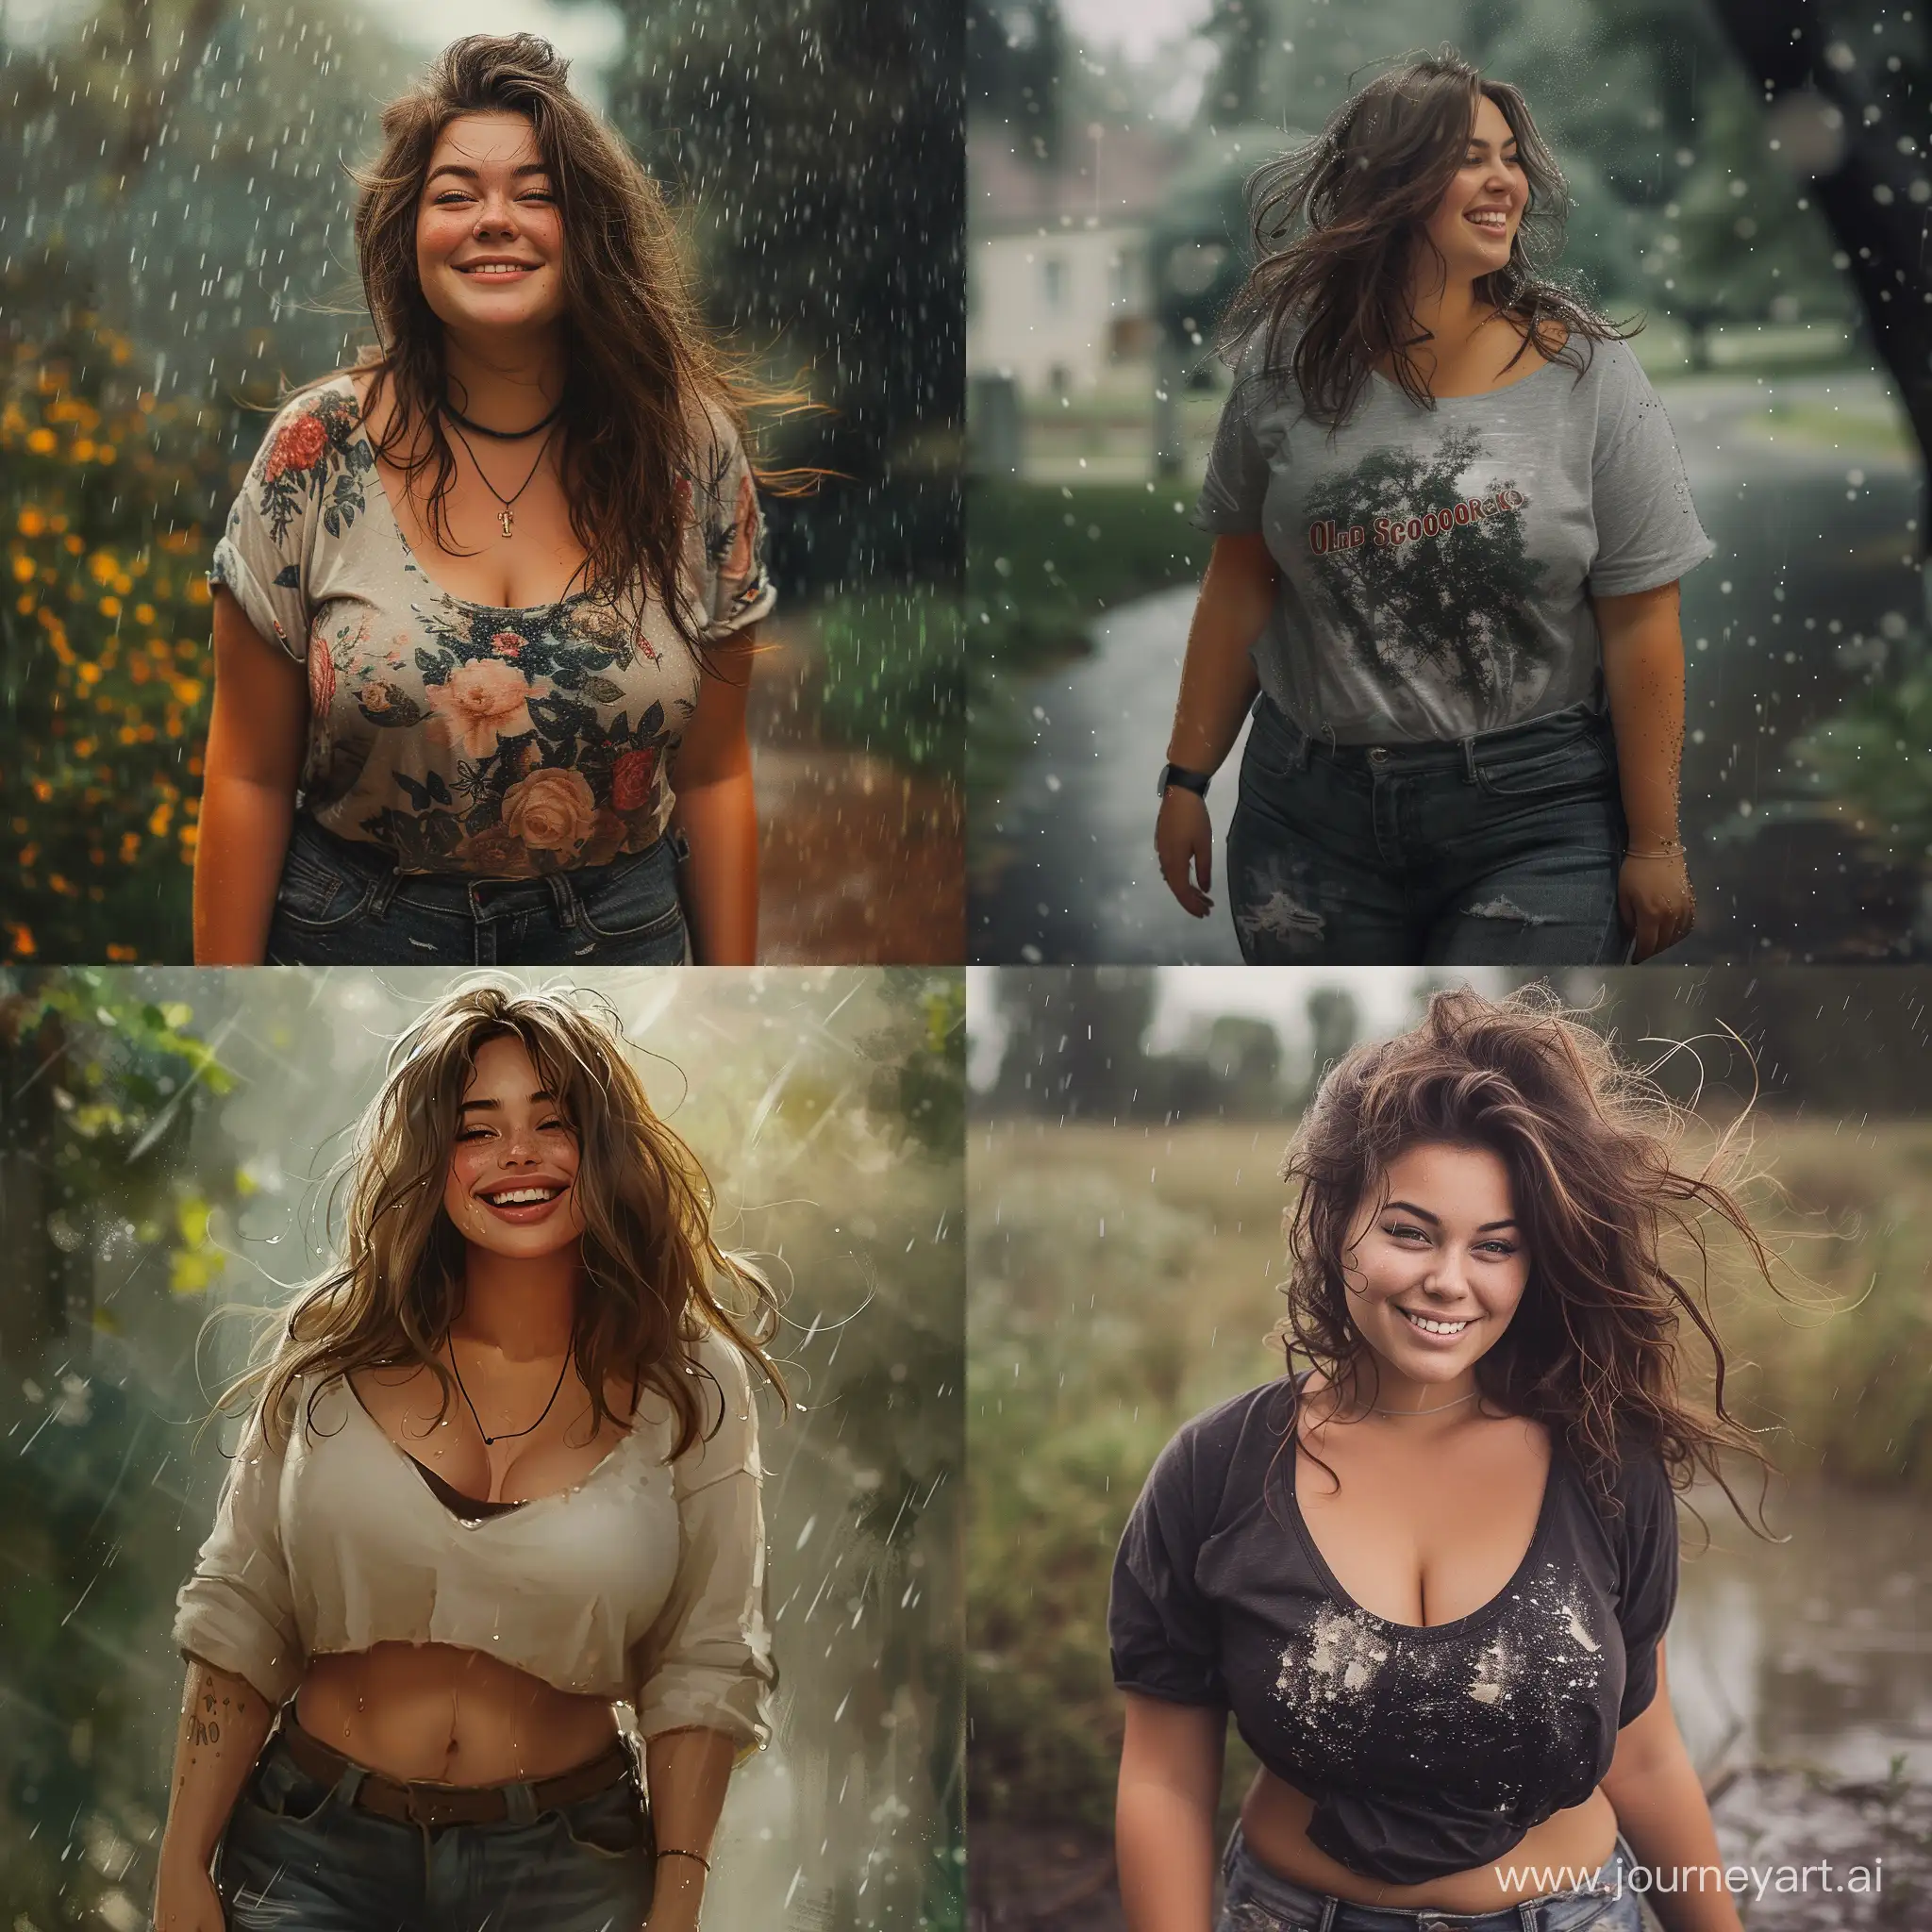 Joyful-TShirt-Contest-in-the-Rain-Smiling-Woman-Embracing-Body-Positivity